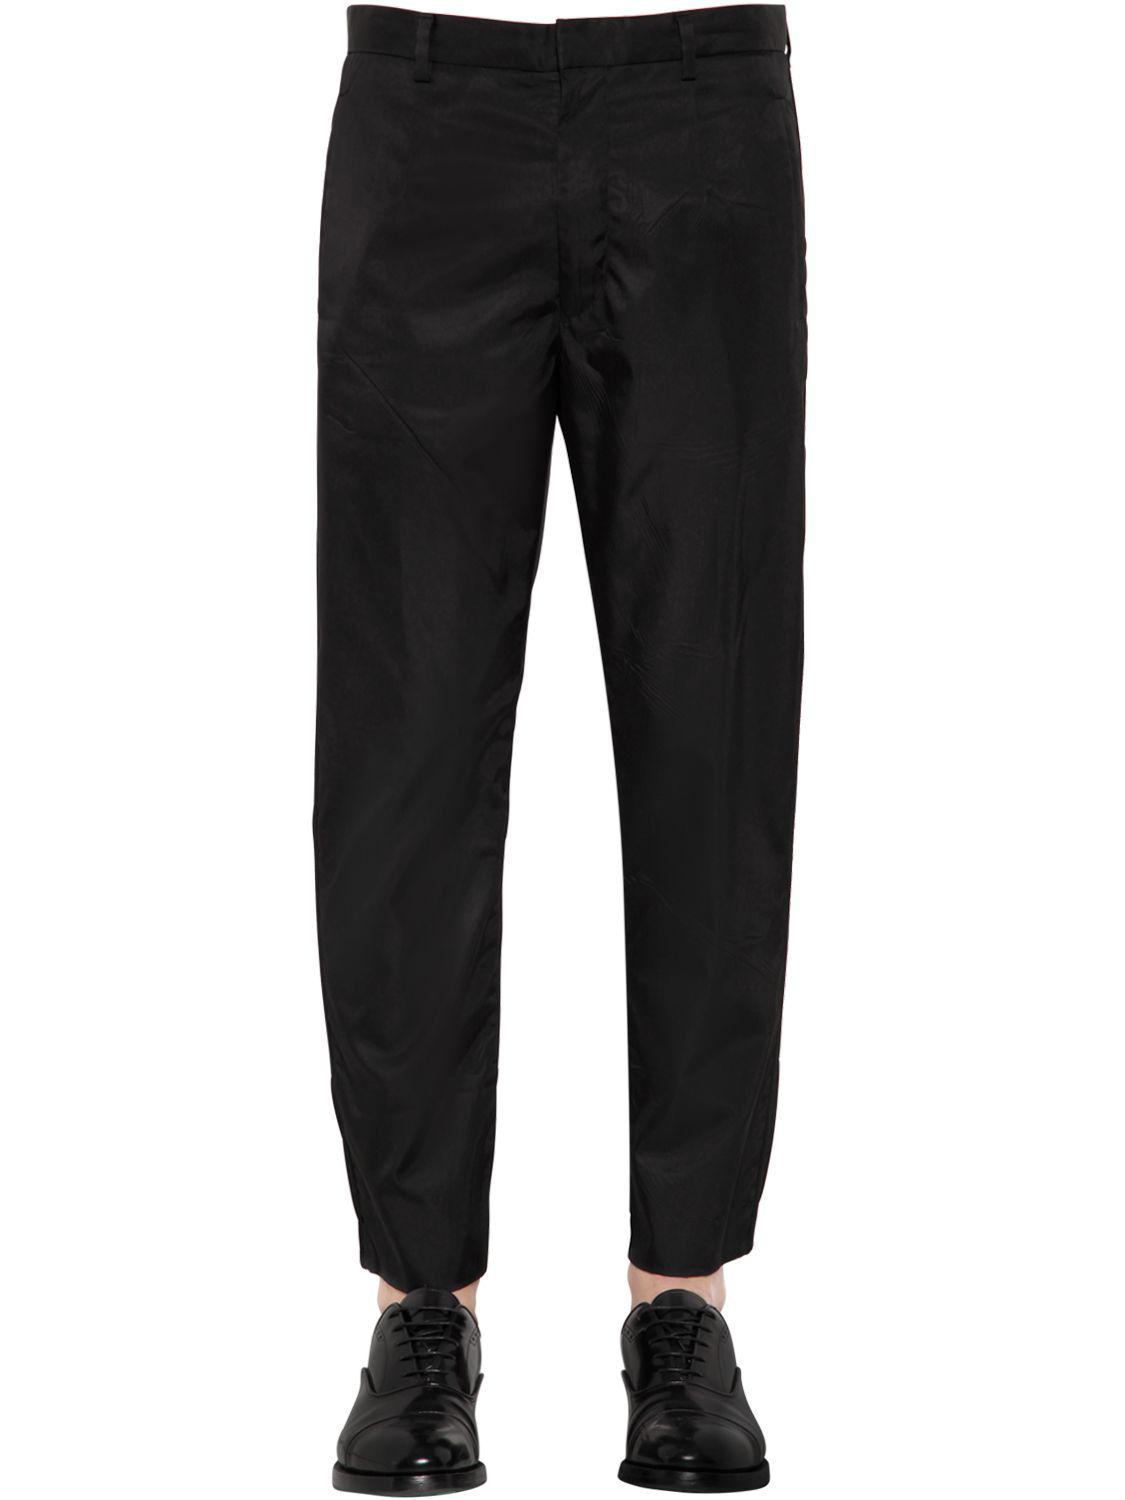 Prada Synthetic Jogging Style Nylon Pants in Black for Men - Lyst